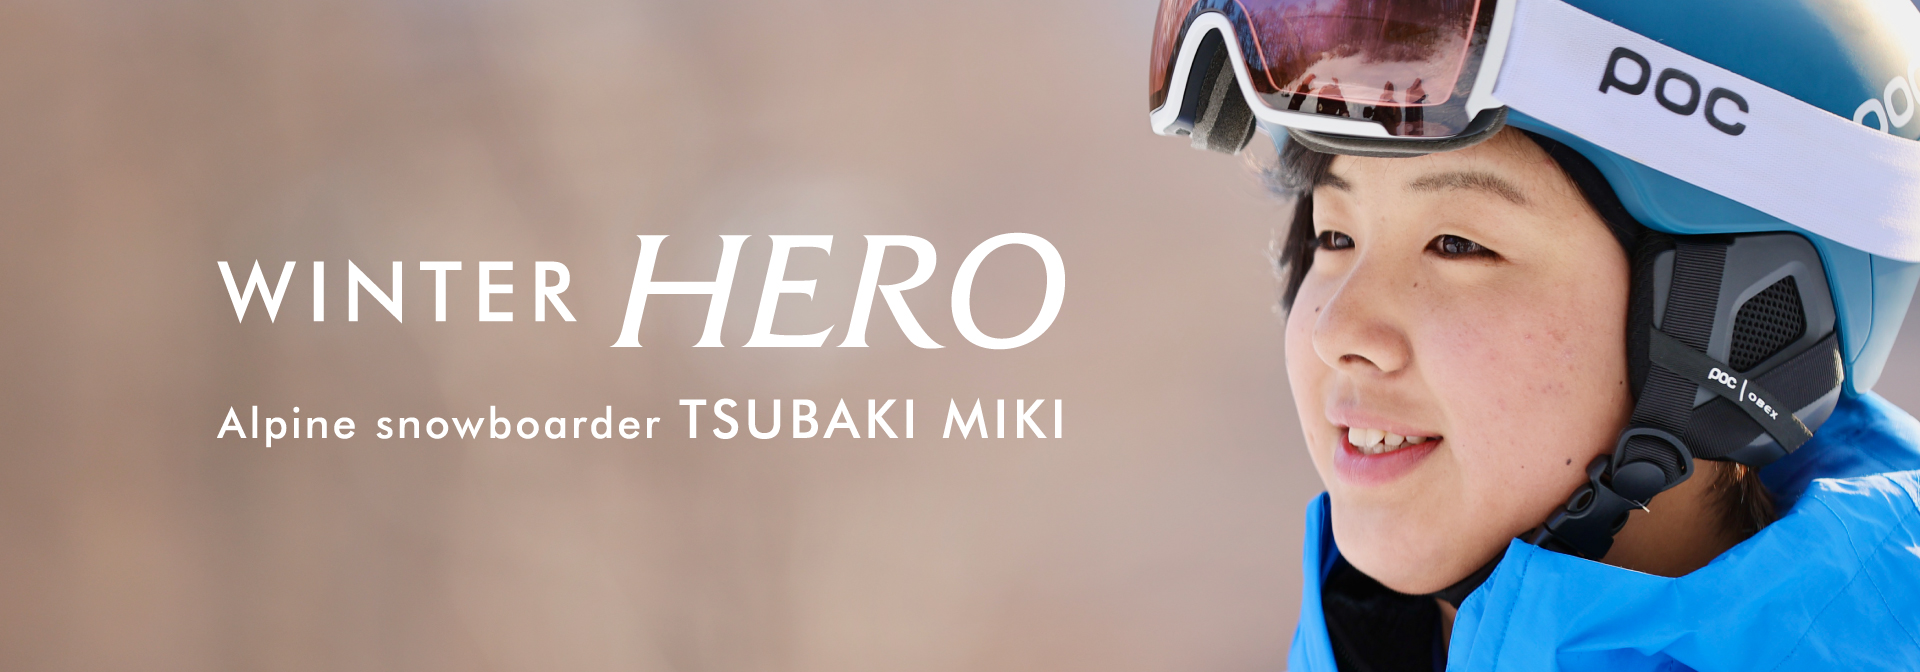 WINTER HERO Alpine snowboarder TSUBAKI MIKI